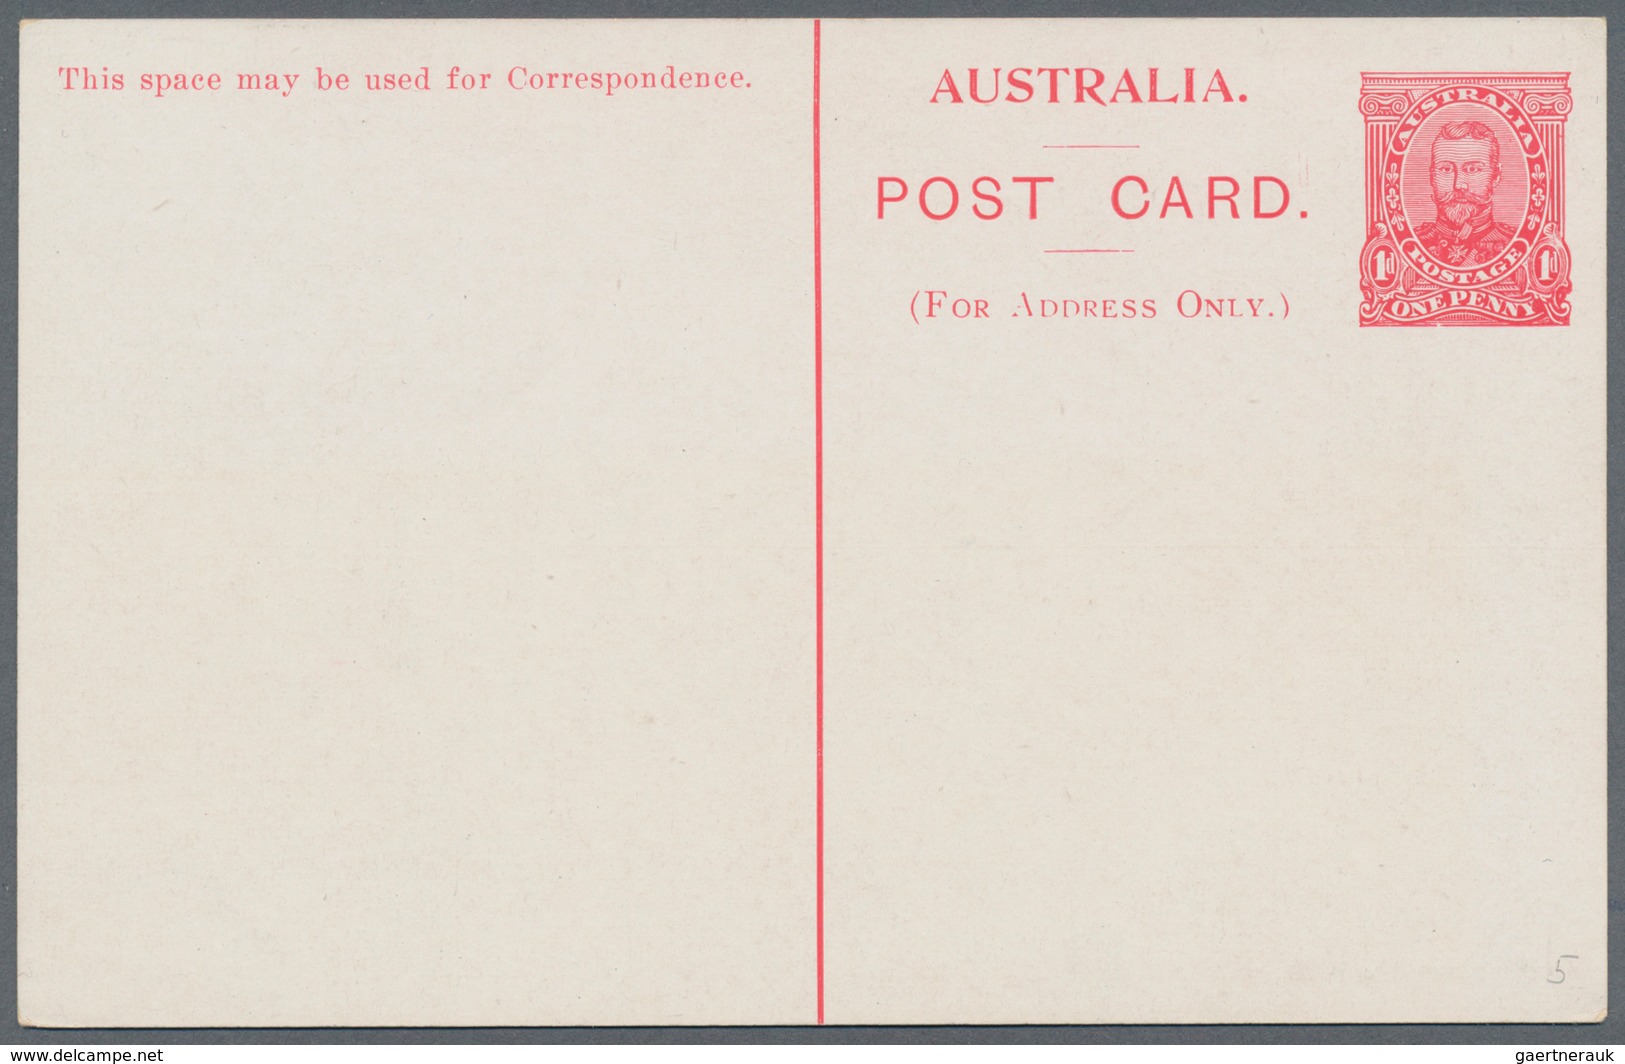 Australien - Ganzsachen: 1911, Victorian Scenes postcards KGV 1d. full-face COMPLETE SET of the twel